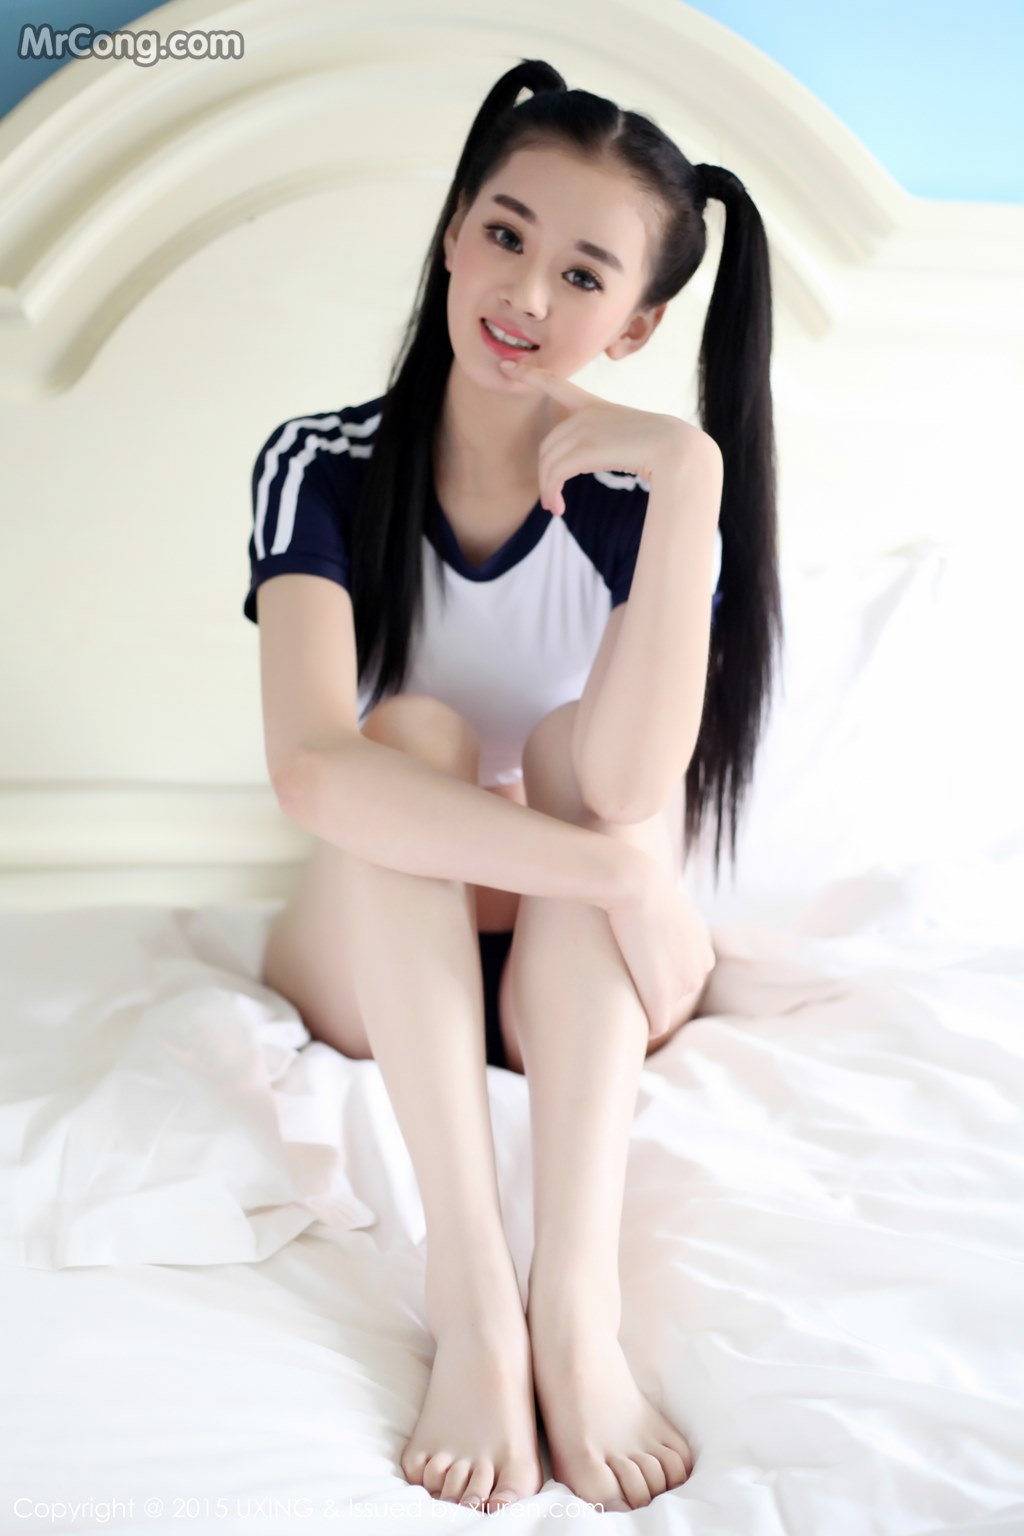 UXING Vol.027: Model Wen Xin Baby (温馨 baby) (45 pictures) photo 1-8